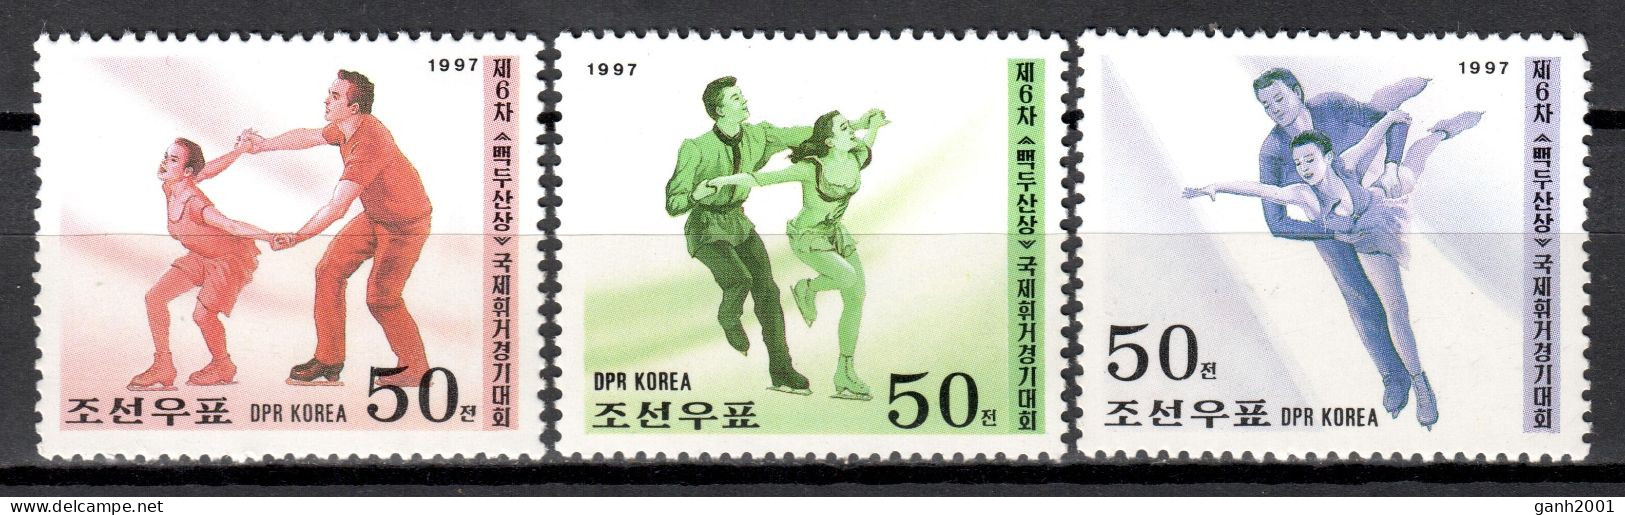 Korea North 1997 Corea / Figure Skating MNH Patinaje Artístico / Lx34  34-2 - Patinage Artistique